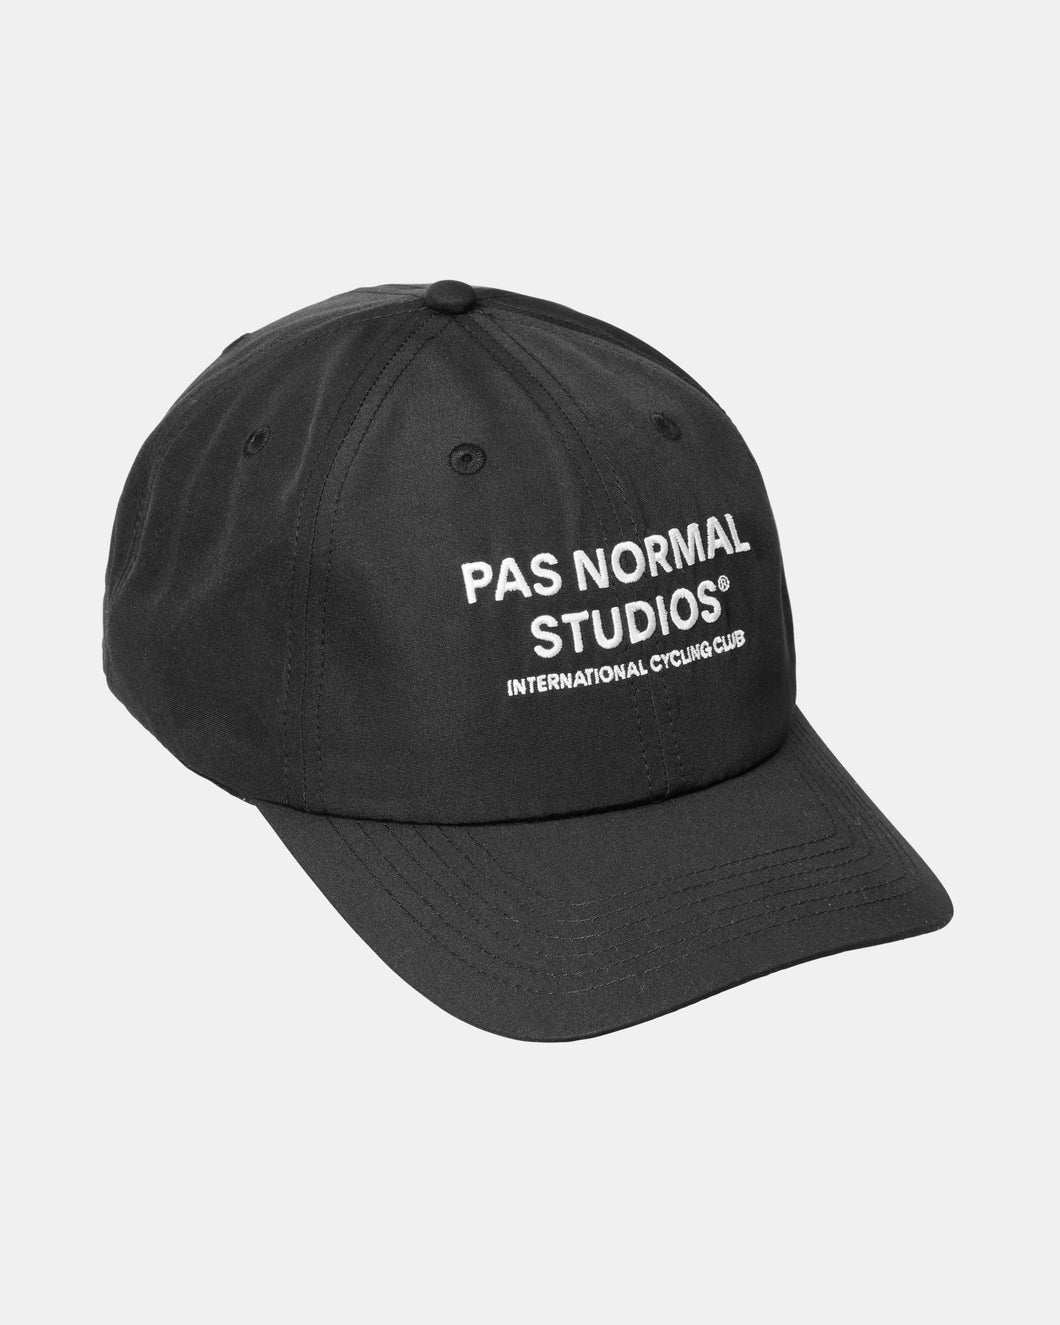 Pas Normal Studios - Off-Race Cap - Black